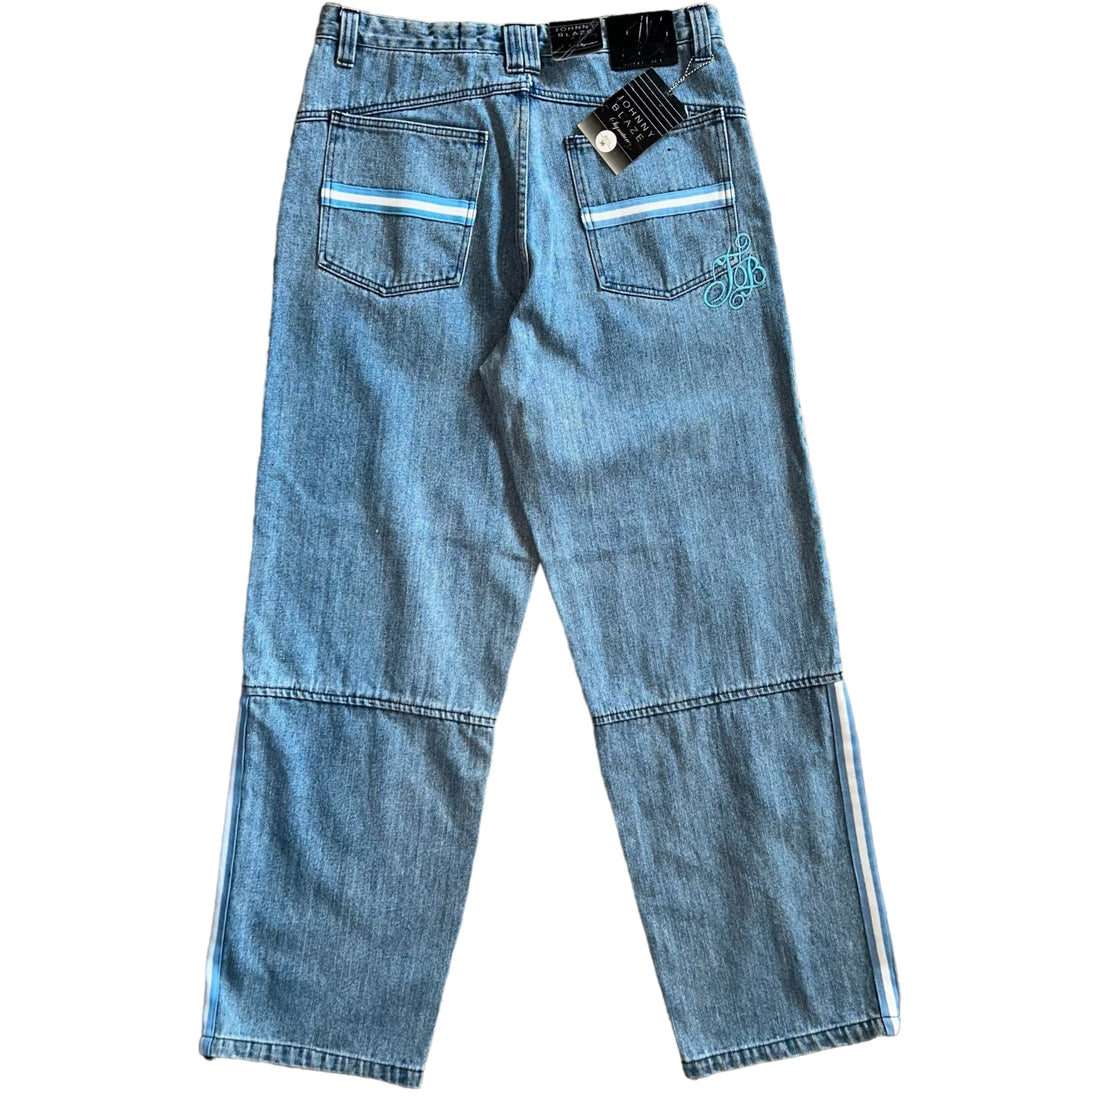 Baggy Jeans Johnny Blaze  (36 USA  XL)